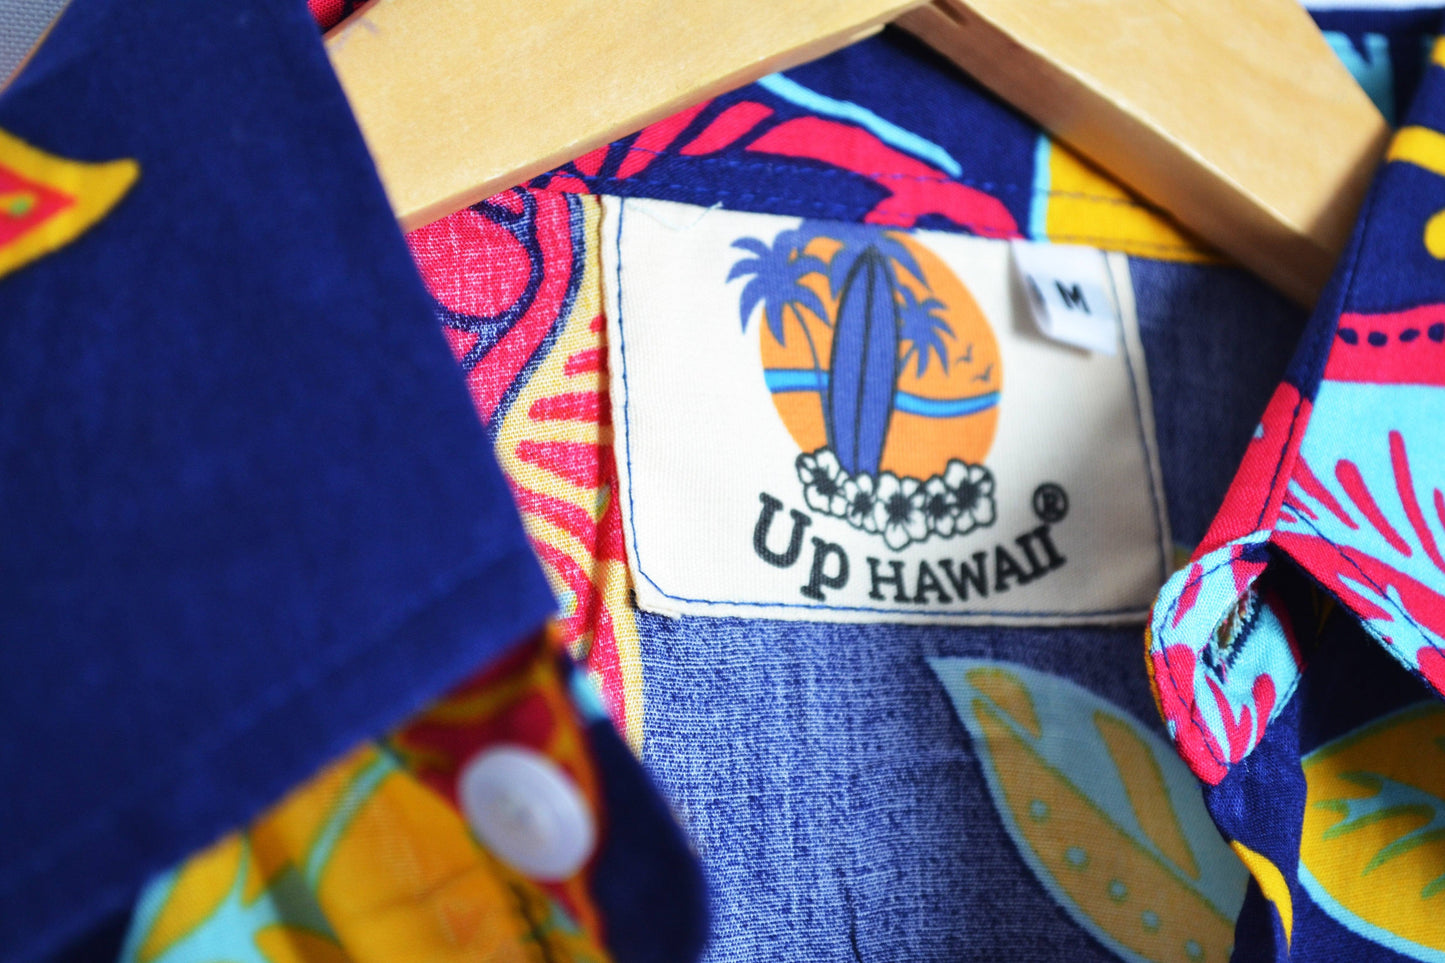 Vue label chemise hawaienne homme bleu marine marque up hawaii - GL BOUTIK